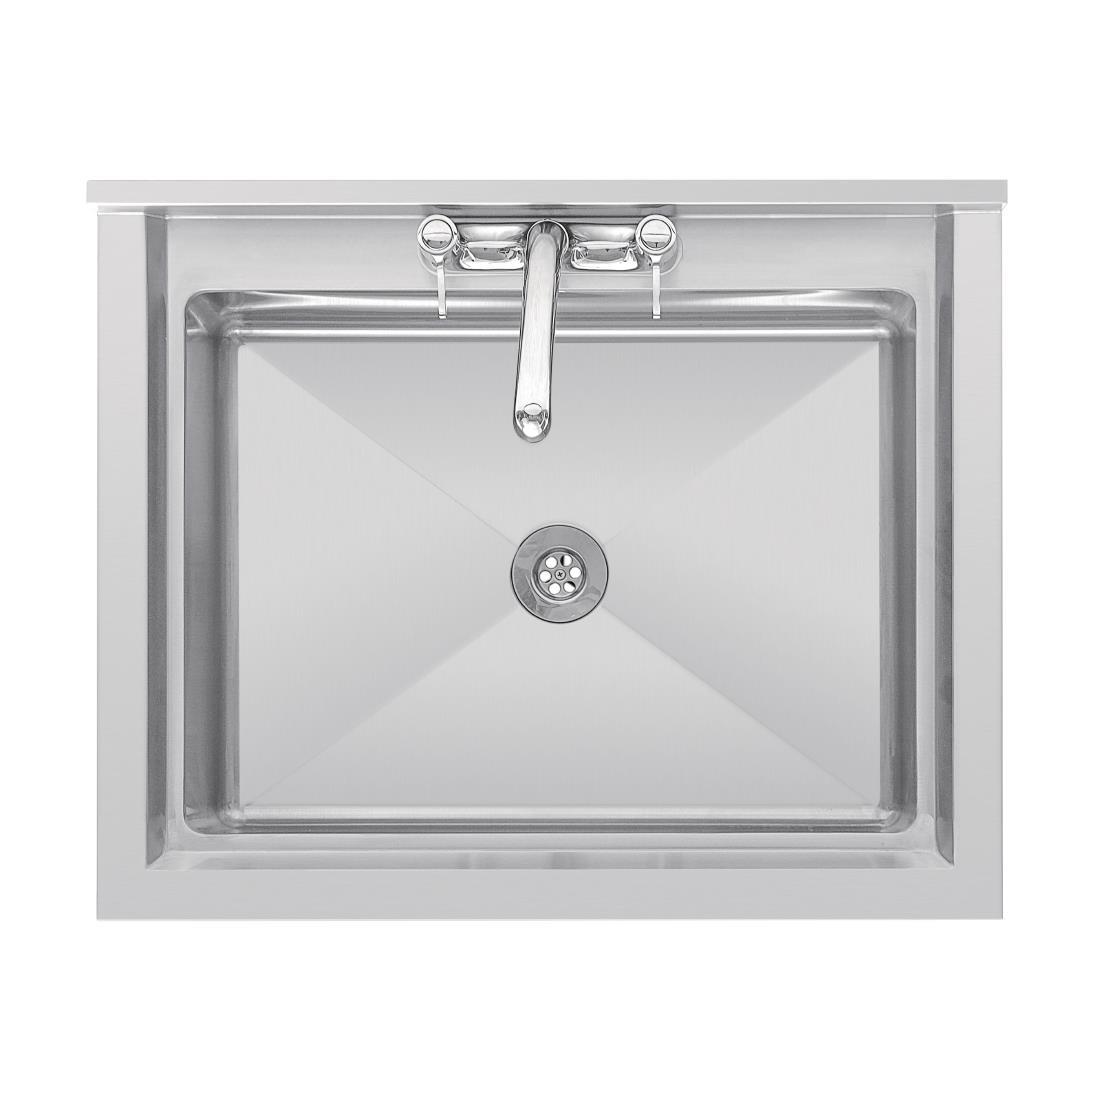 Vogue Stainless Steel Midi Pot Wash Sink with Undershelf - GJ537  - 2